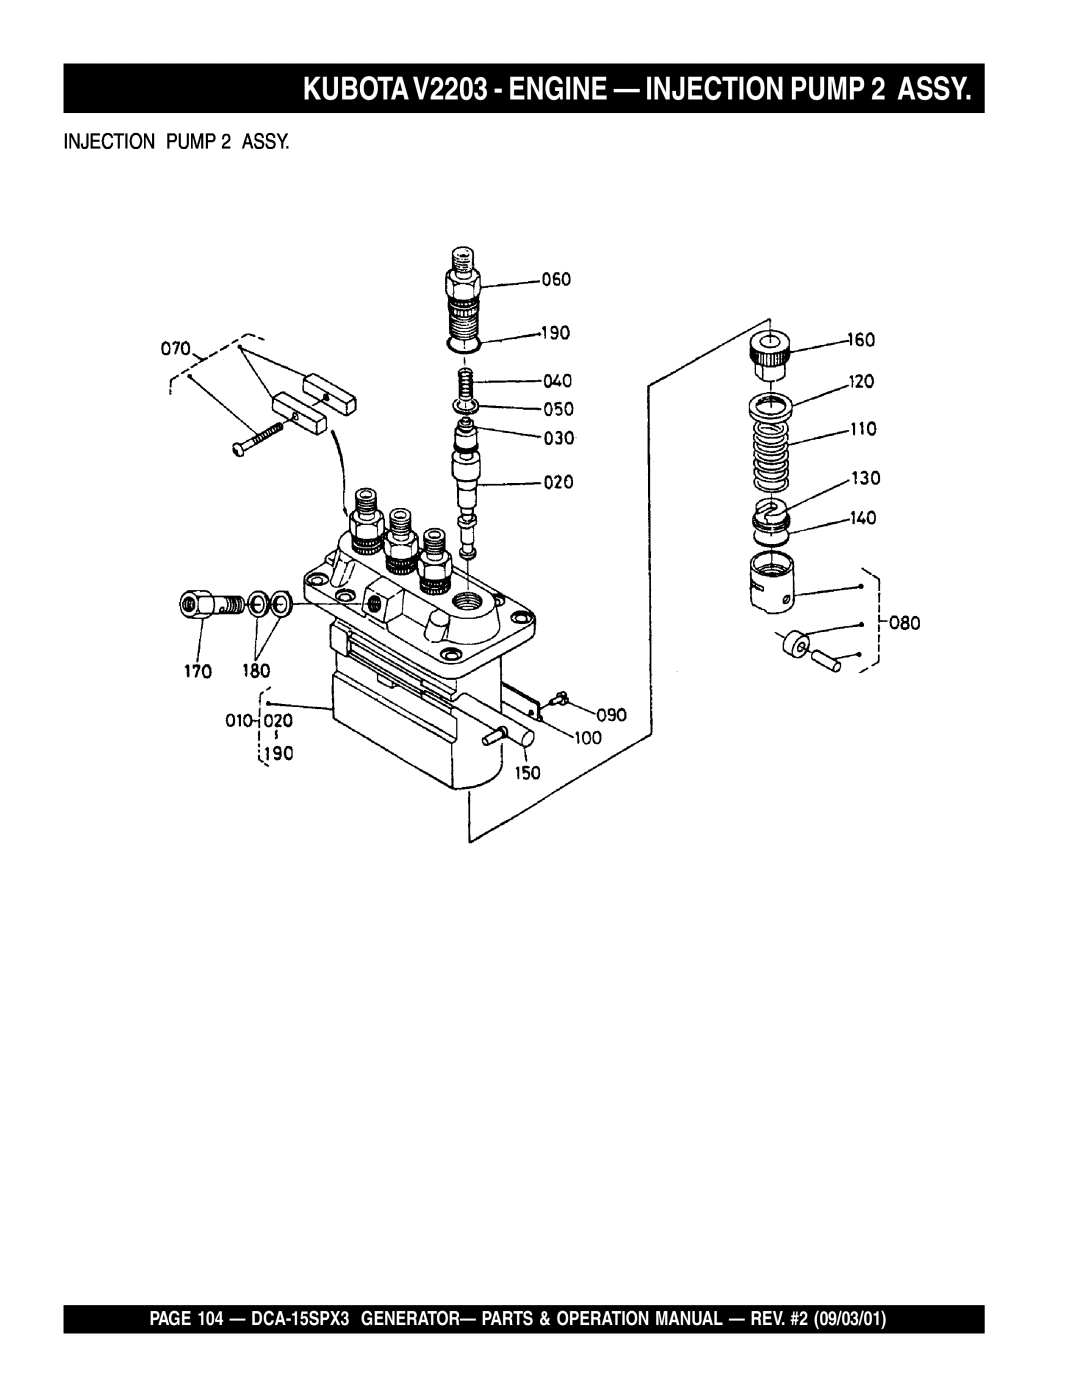 Multiquip DCA-15SPX3 operation manual KUBOTA V2203 - ENGINE — INJECTION PUMP 2 ASSY 